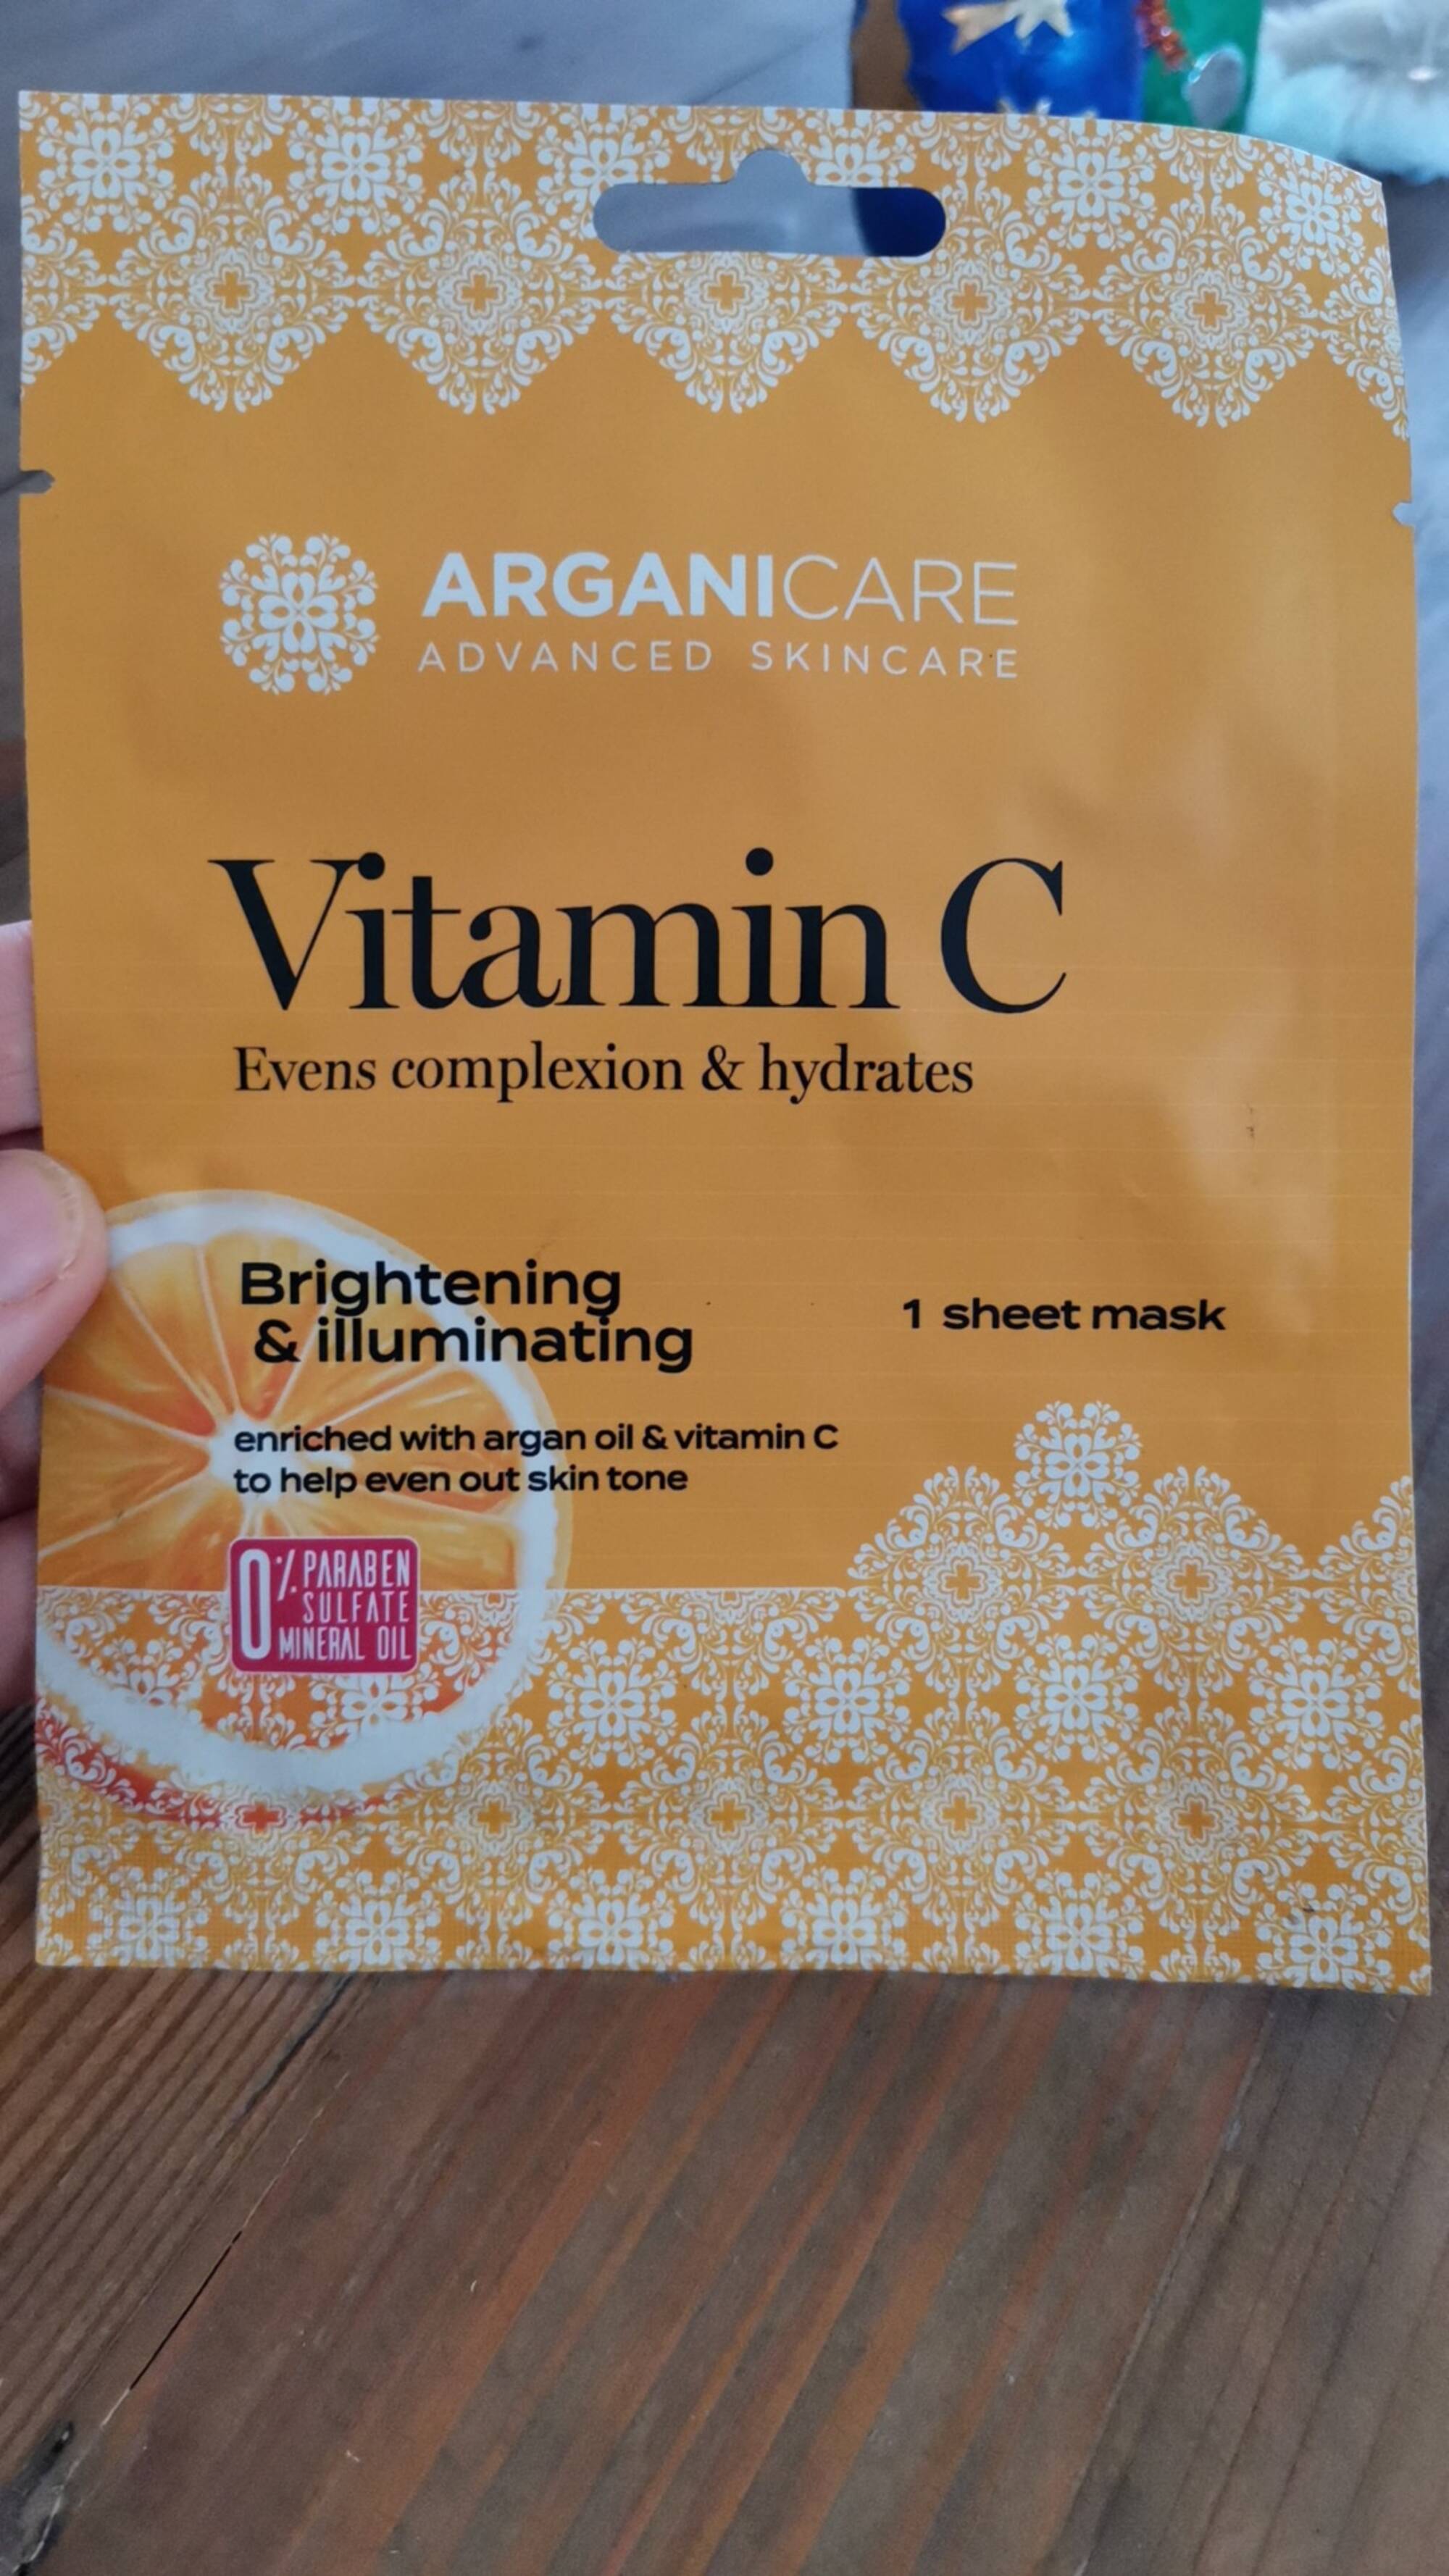 ARGANICARE - Vitamin C - Brightening & illuminating mask